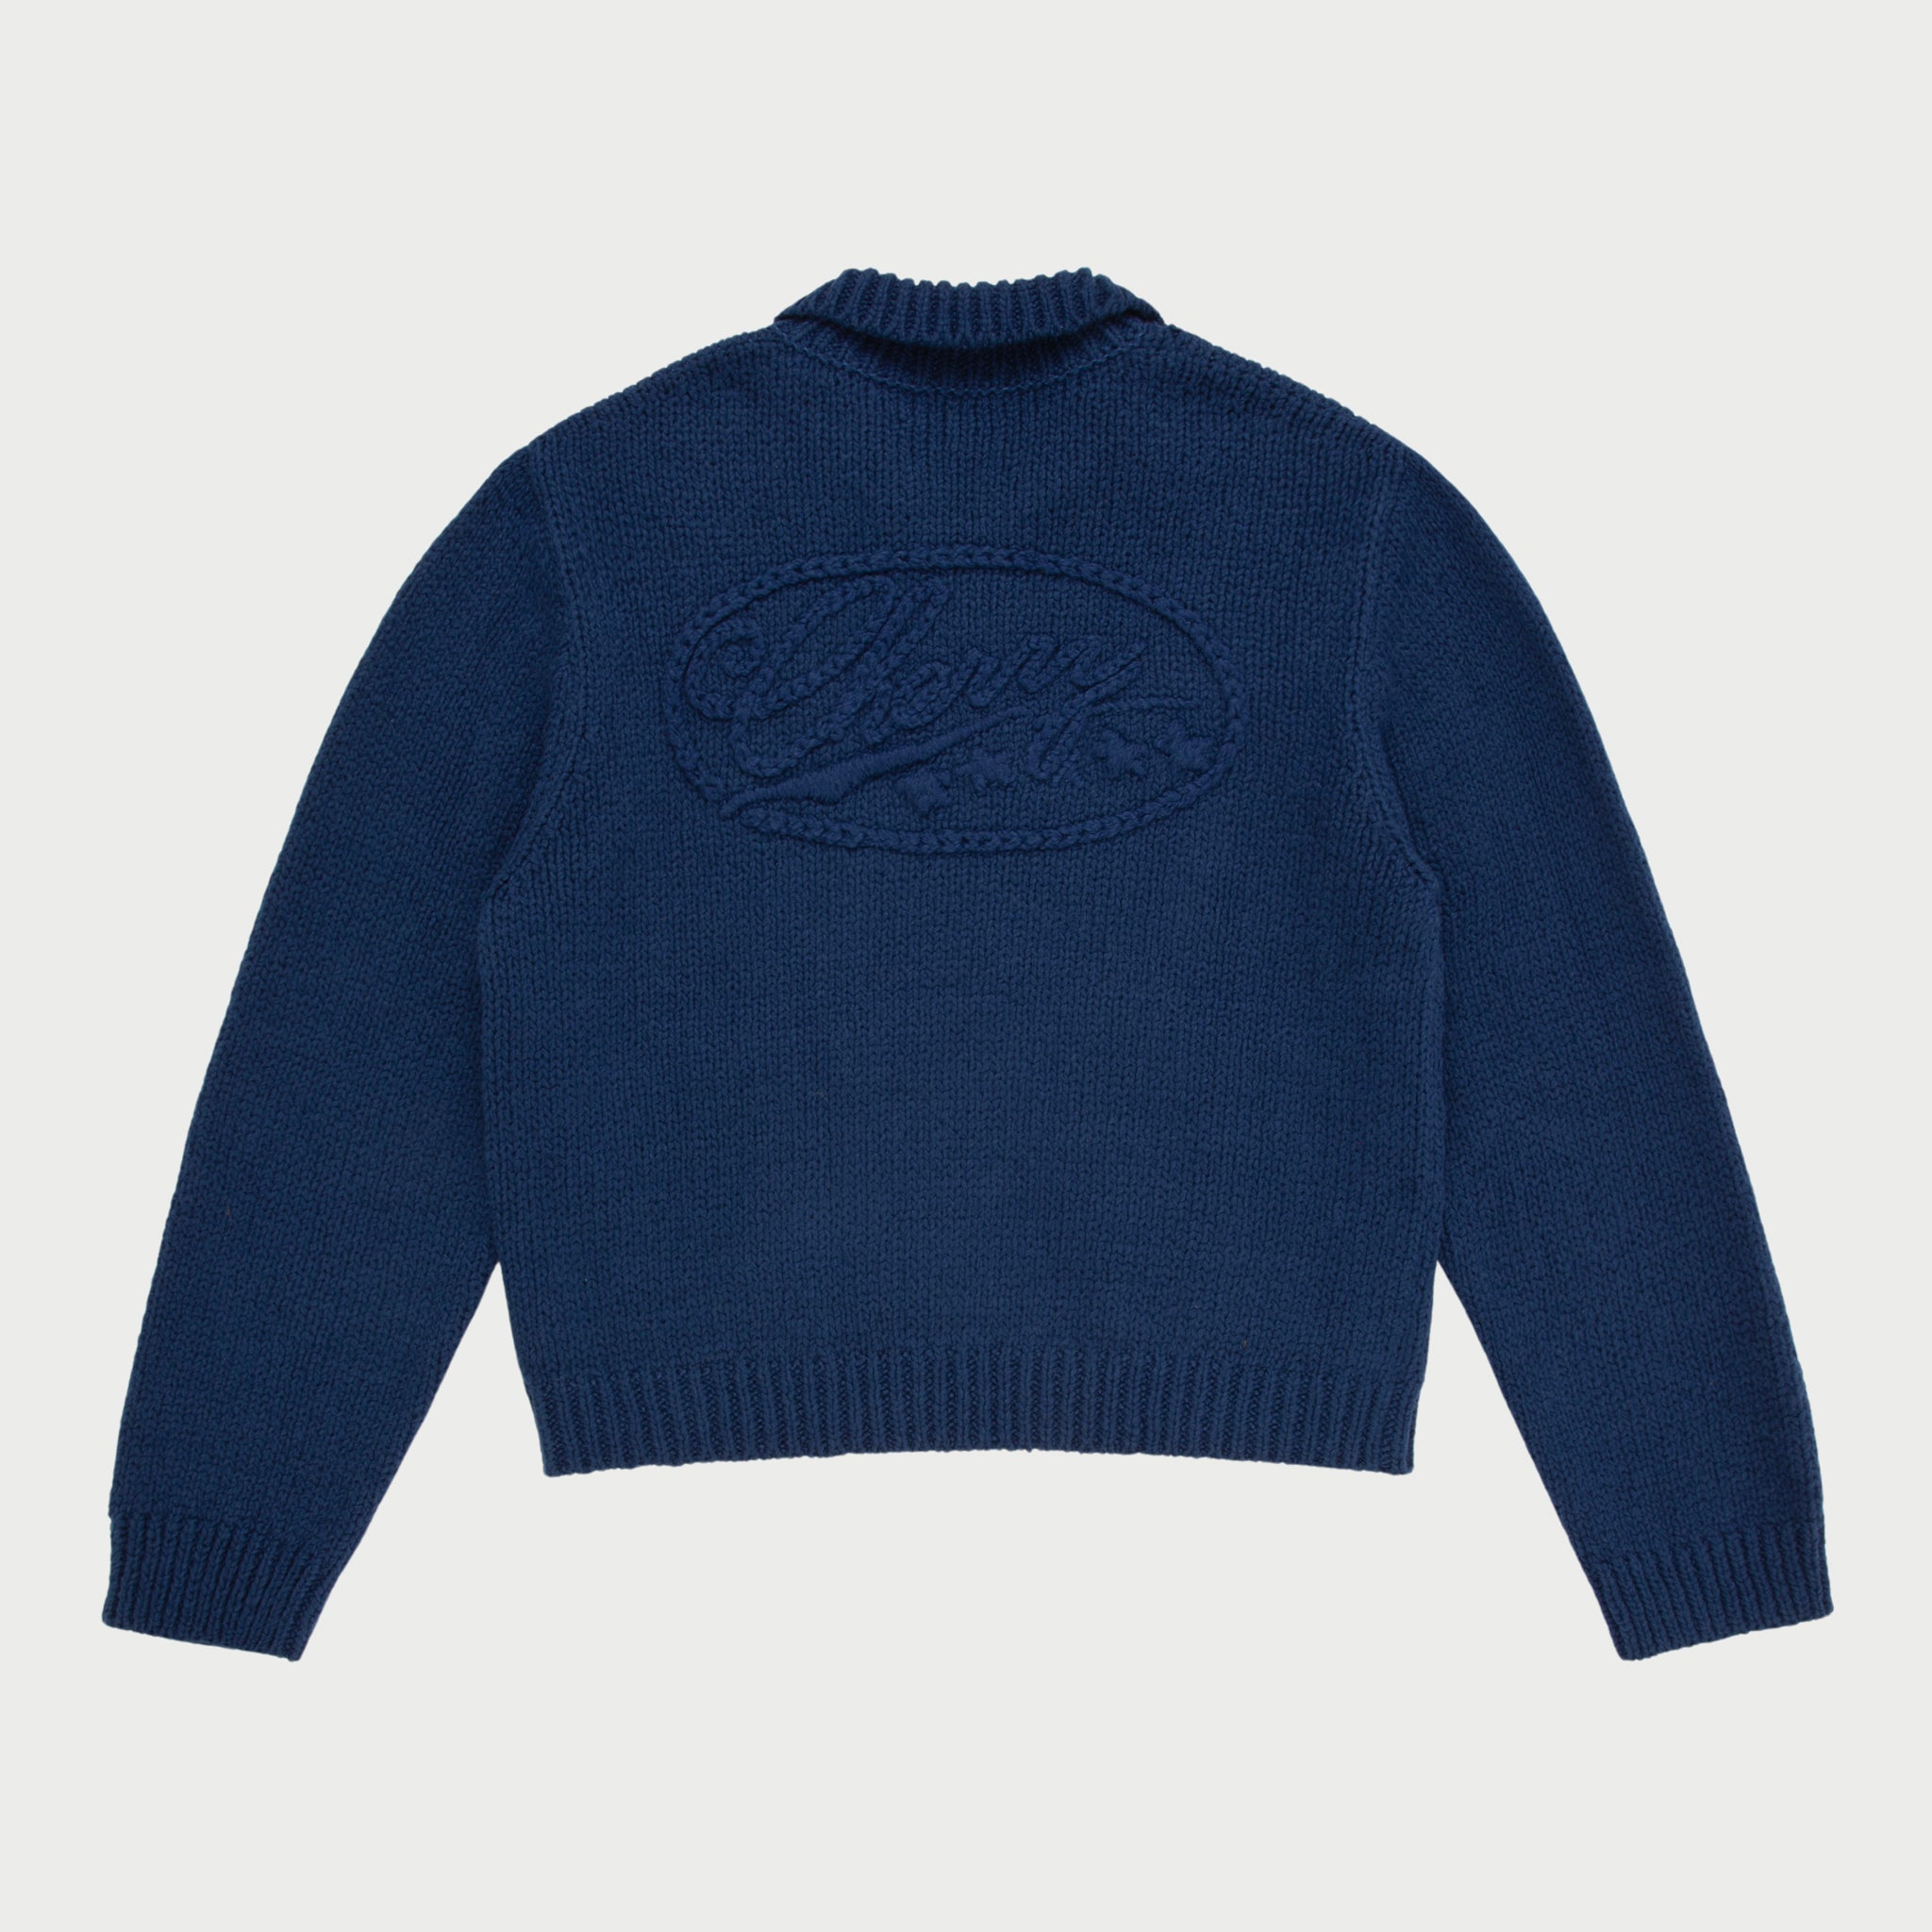 Cotton Knit Club Jacket (Royal Blue)